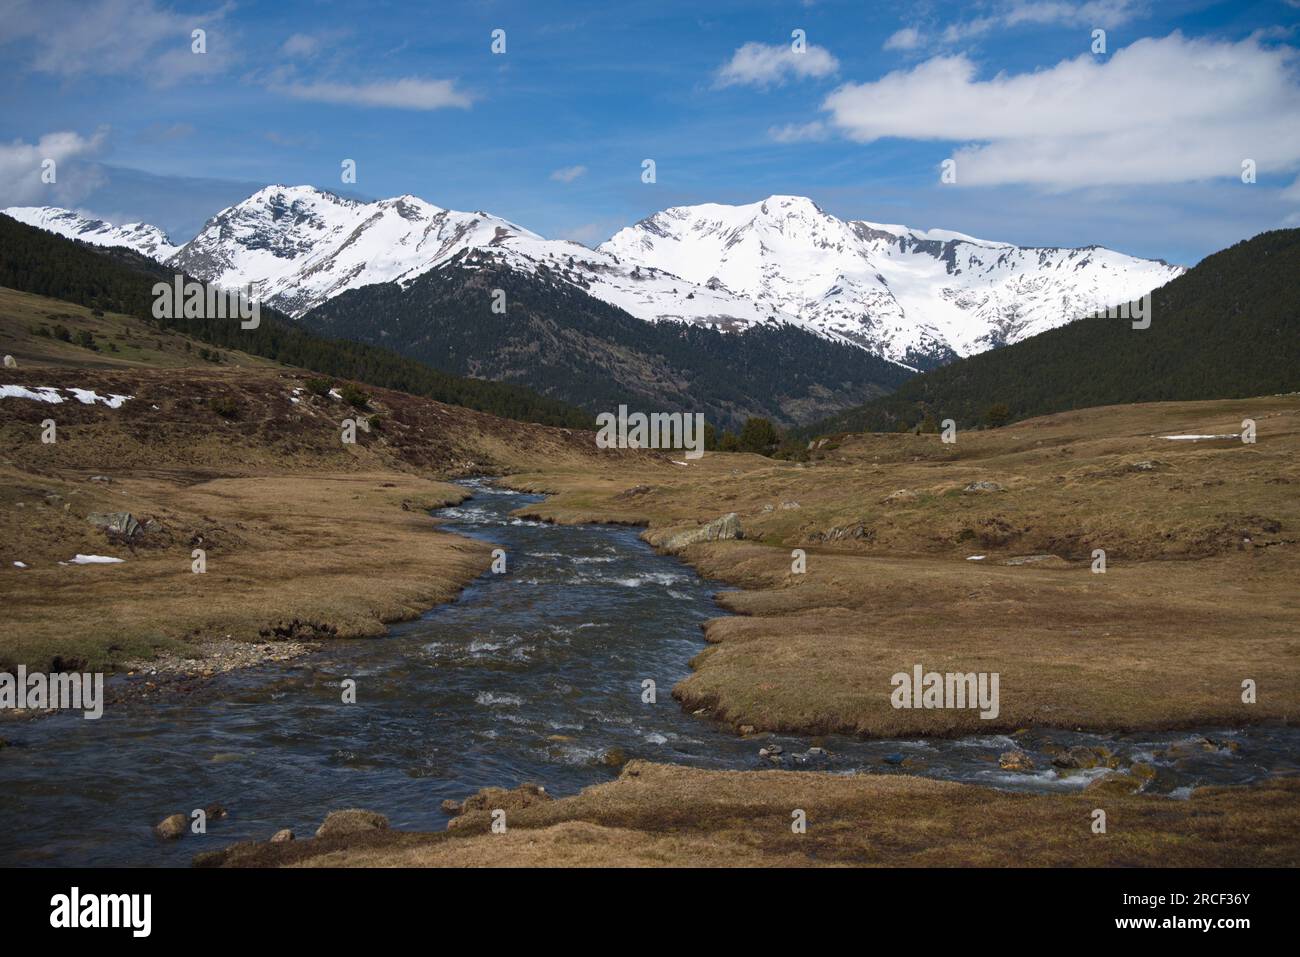 Landscape of Pla de Beret in the Aran Valley, Pyrenees. / Paisaje de Pla de Beret en el Valle de Aran, Pirineos. Stock Photo